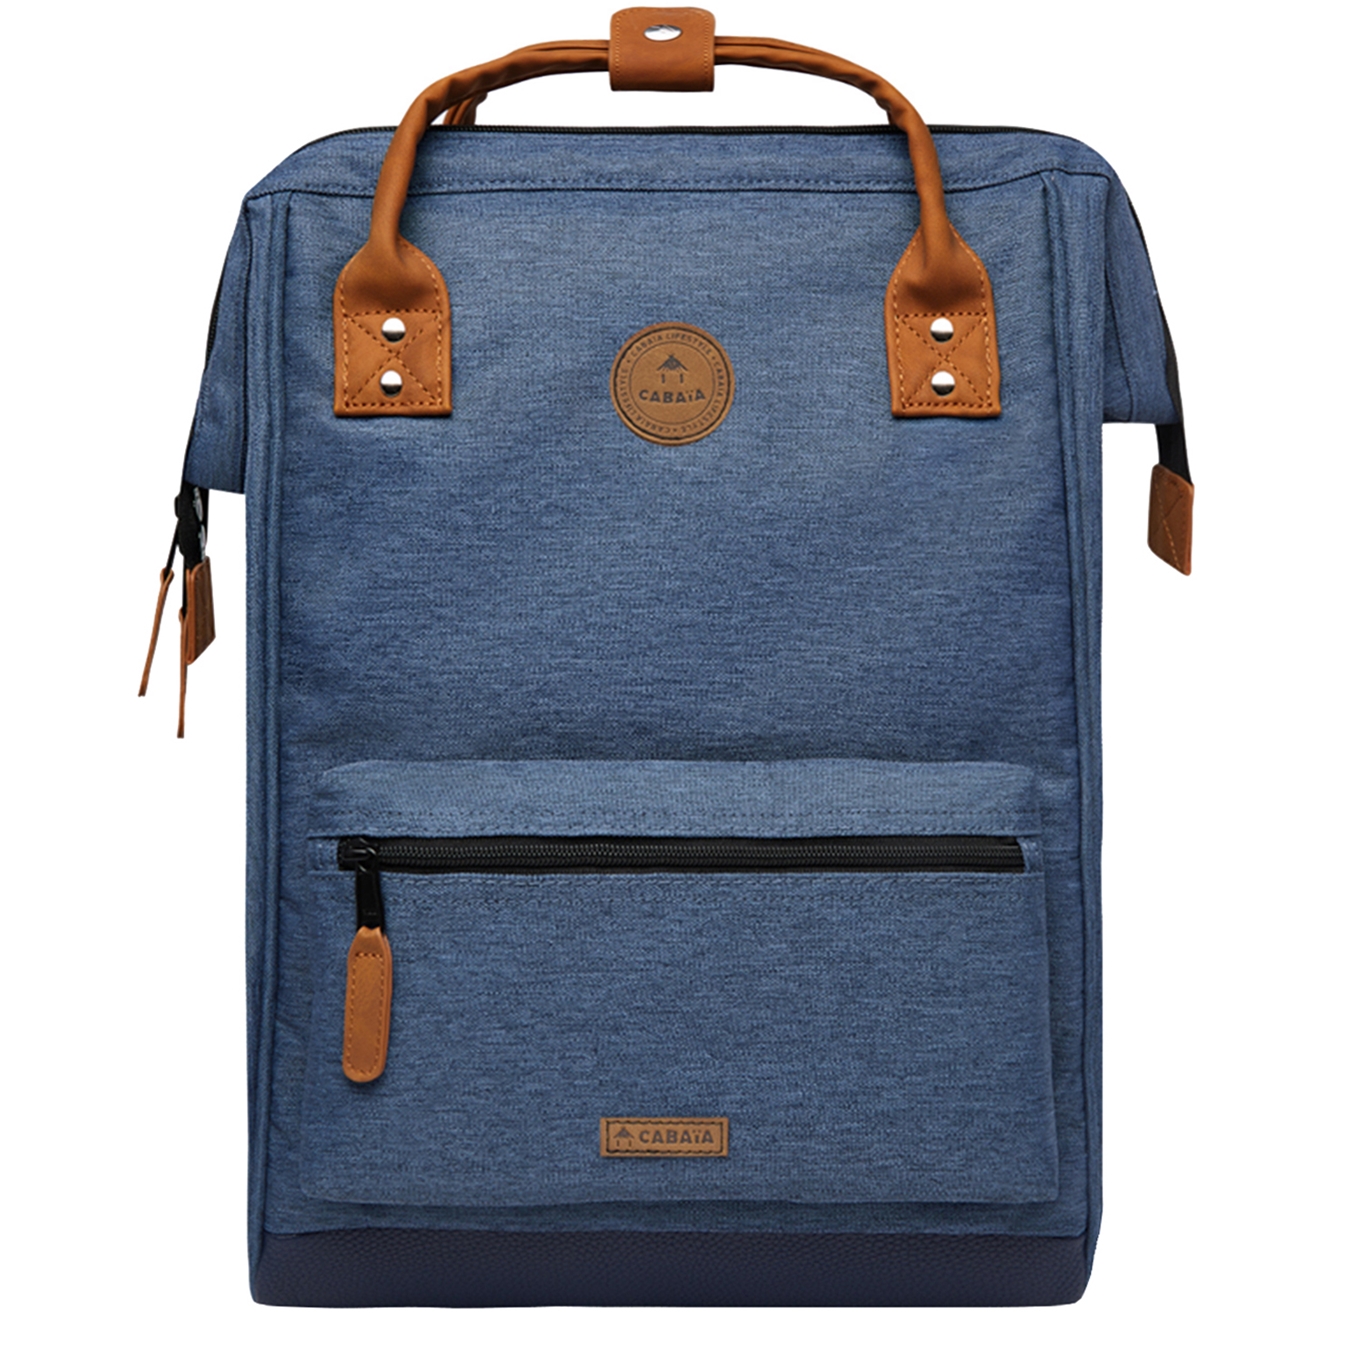 Cabaia Adventurer Bag Large paris backpack